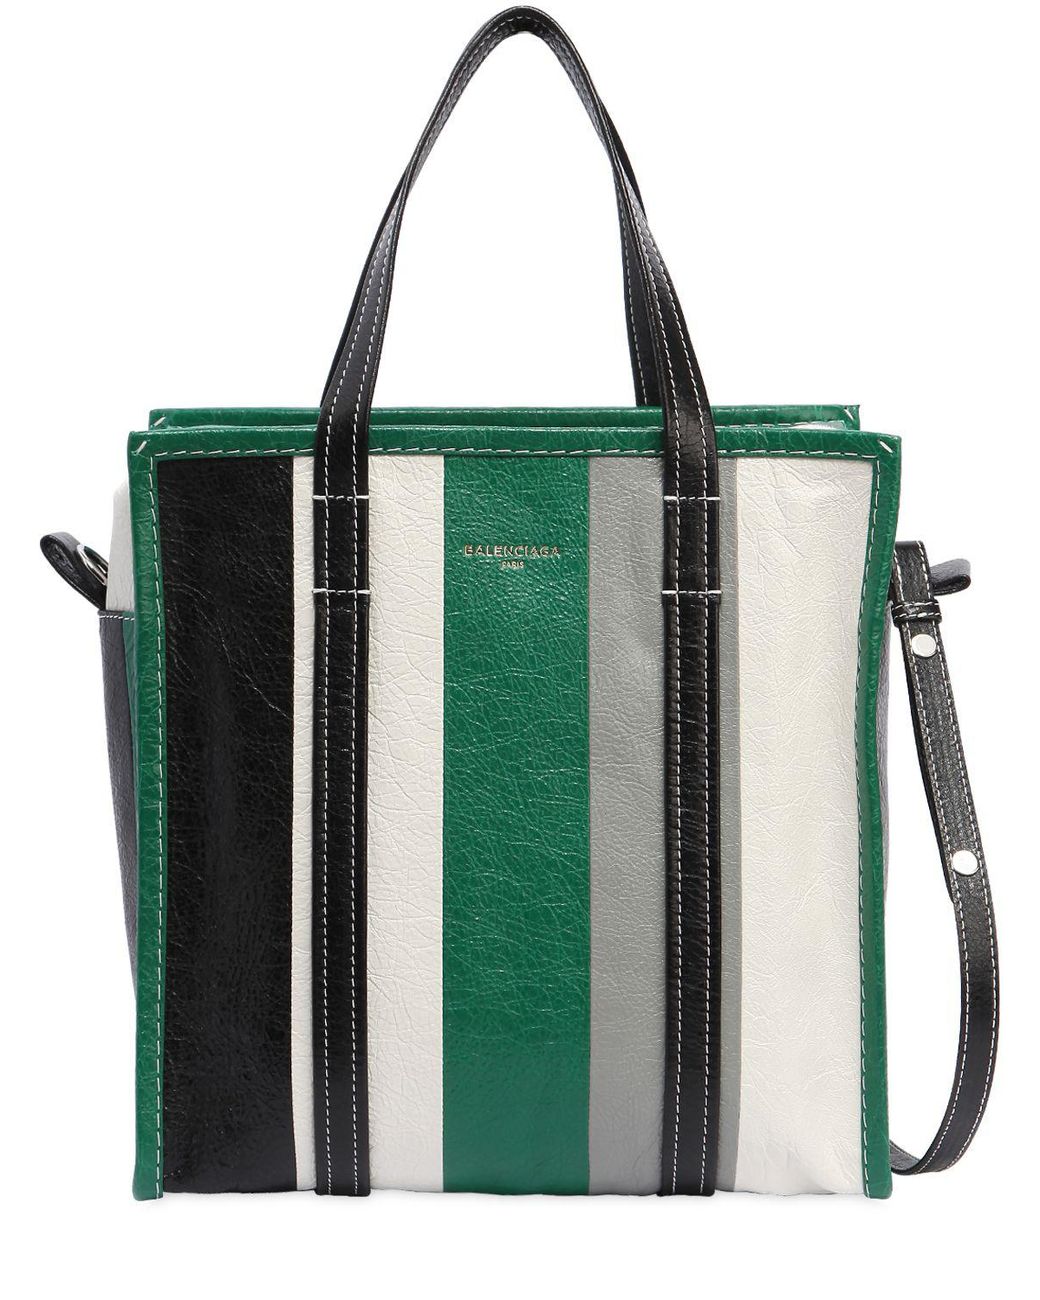 Balenciaga Small Bazar Striped Leather Tote Bag in Green/Black (Green) |  Lyst